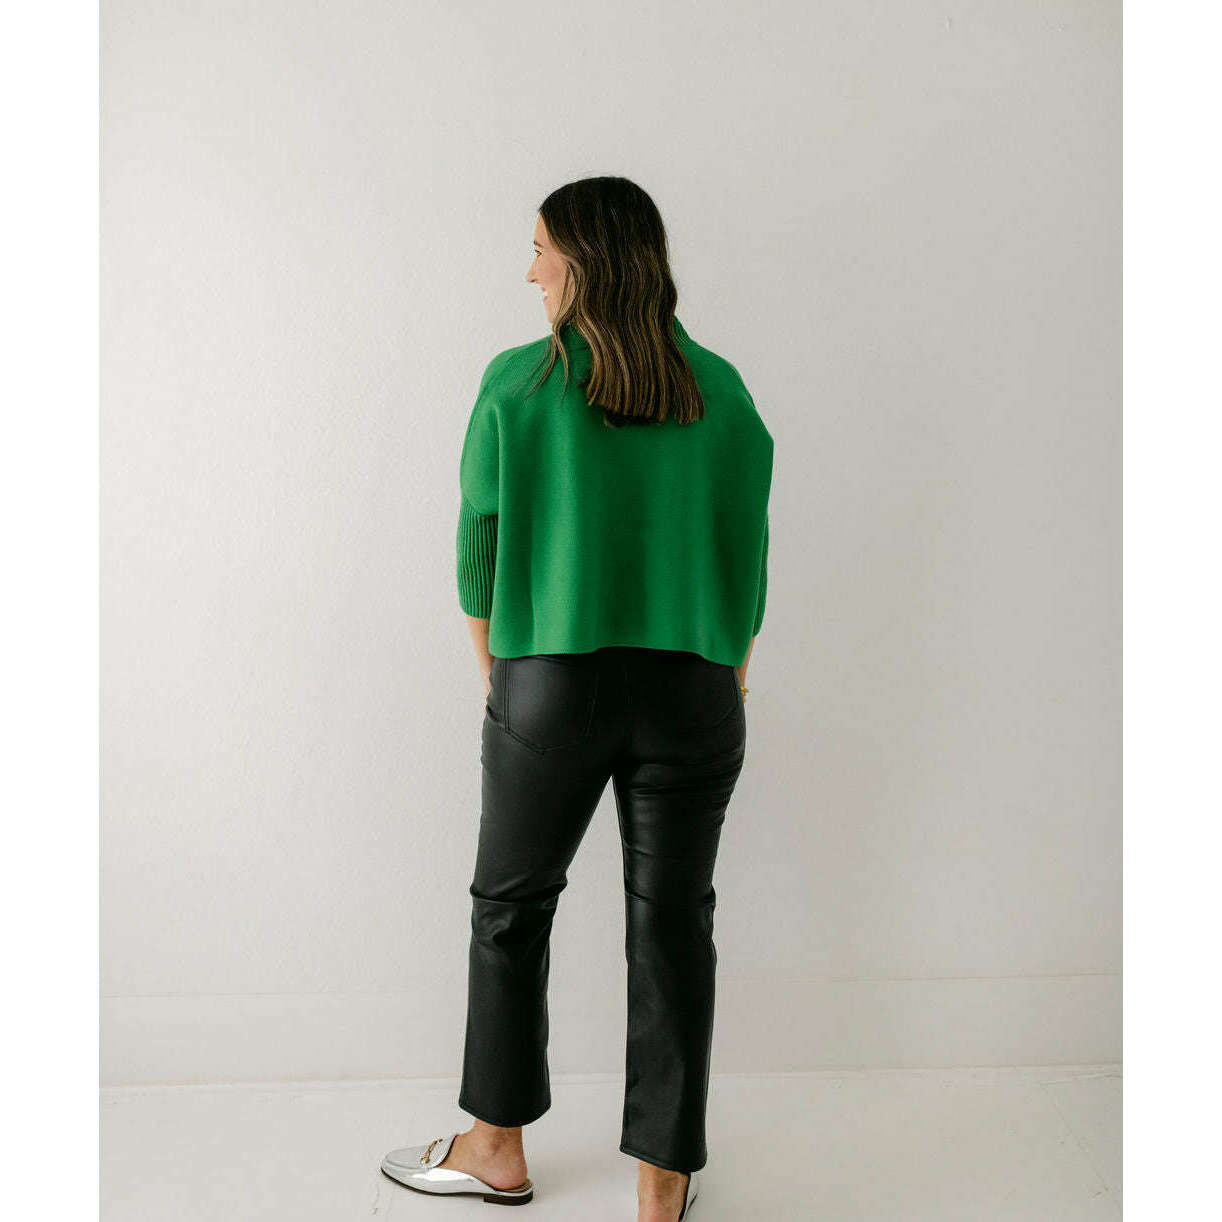 8.28 Boutique:Kerisma Knits,Kerisma Knits Aja Sweater in Mighty Green,Sweaters